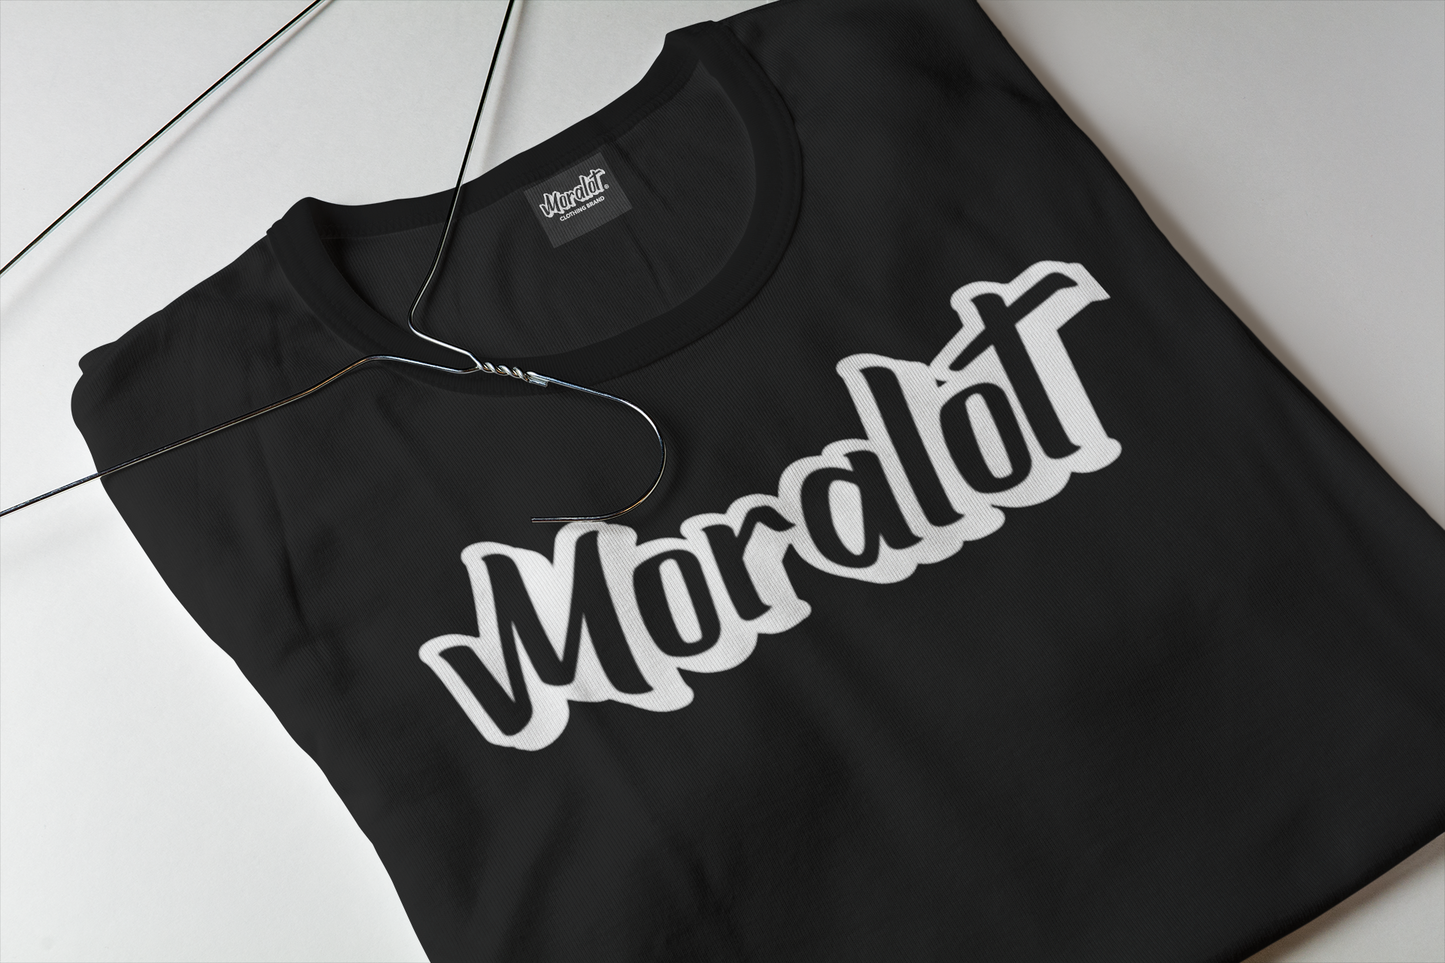 Moralot T-Shirts